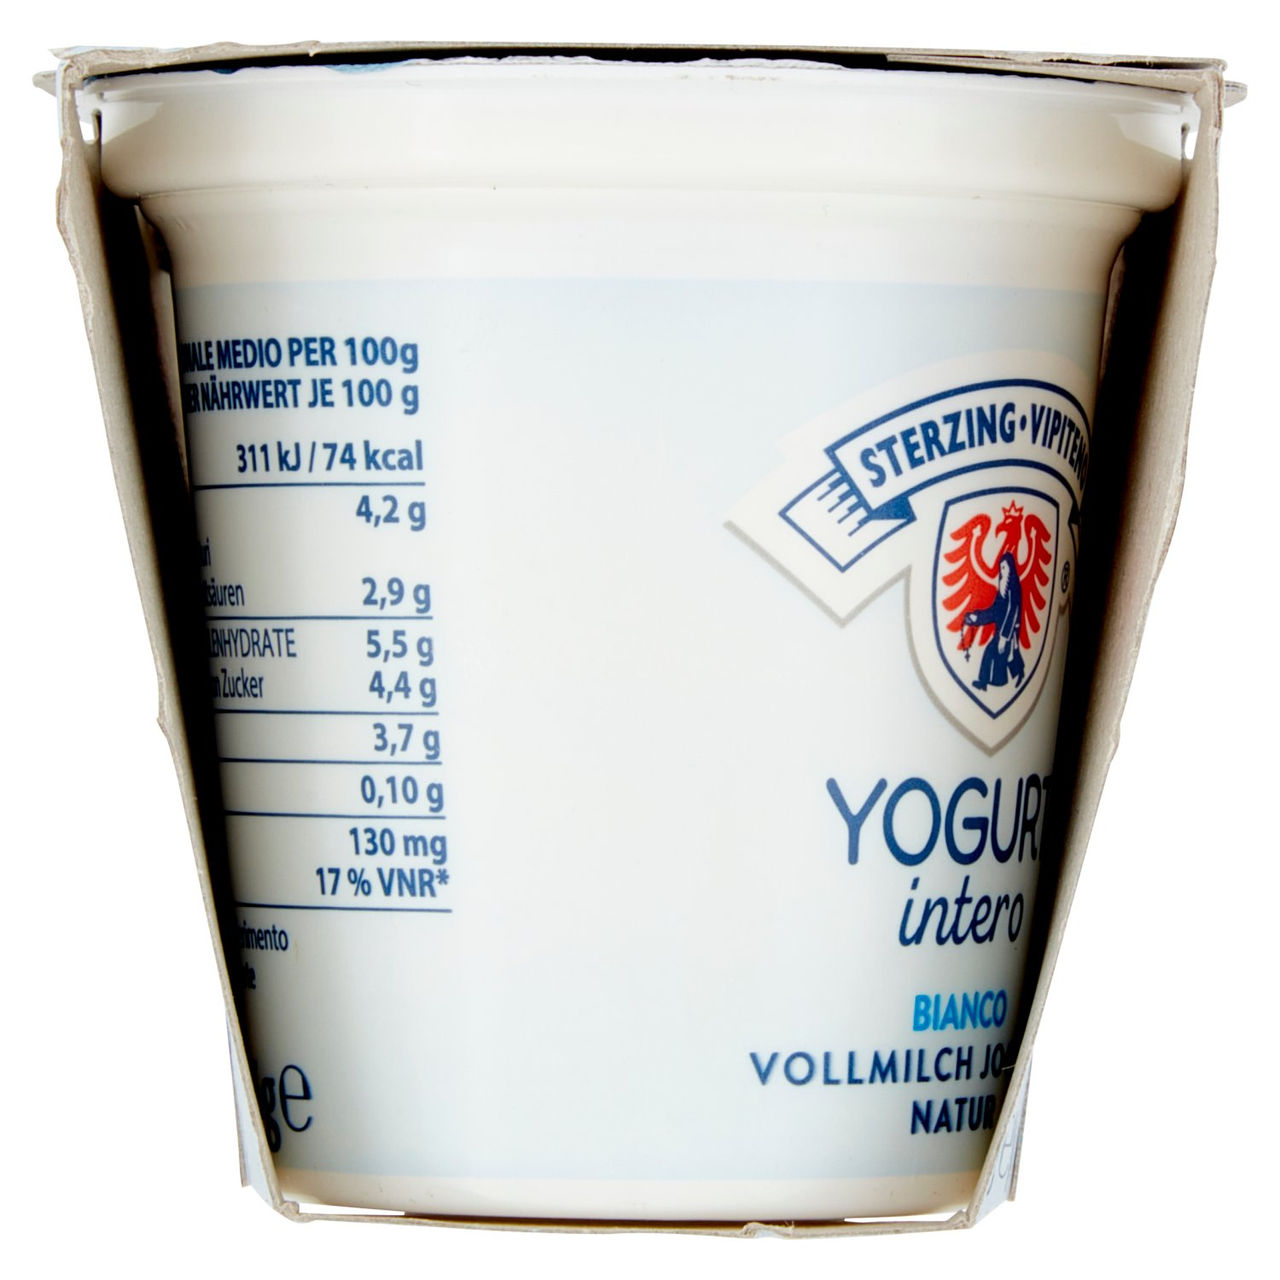 Sterzing Vipiteno Yogurt Intero in vendita online